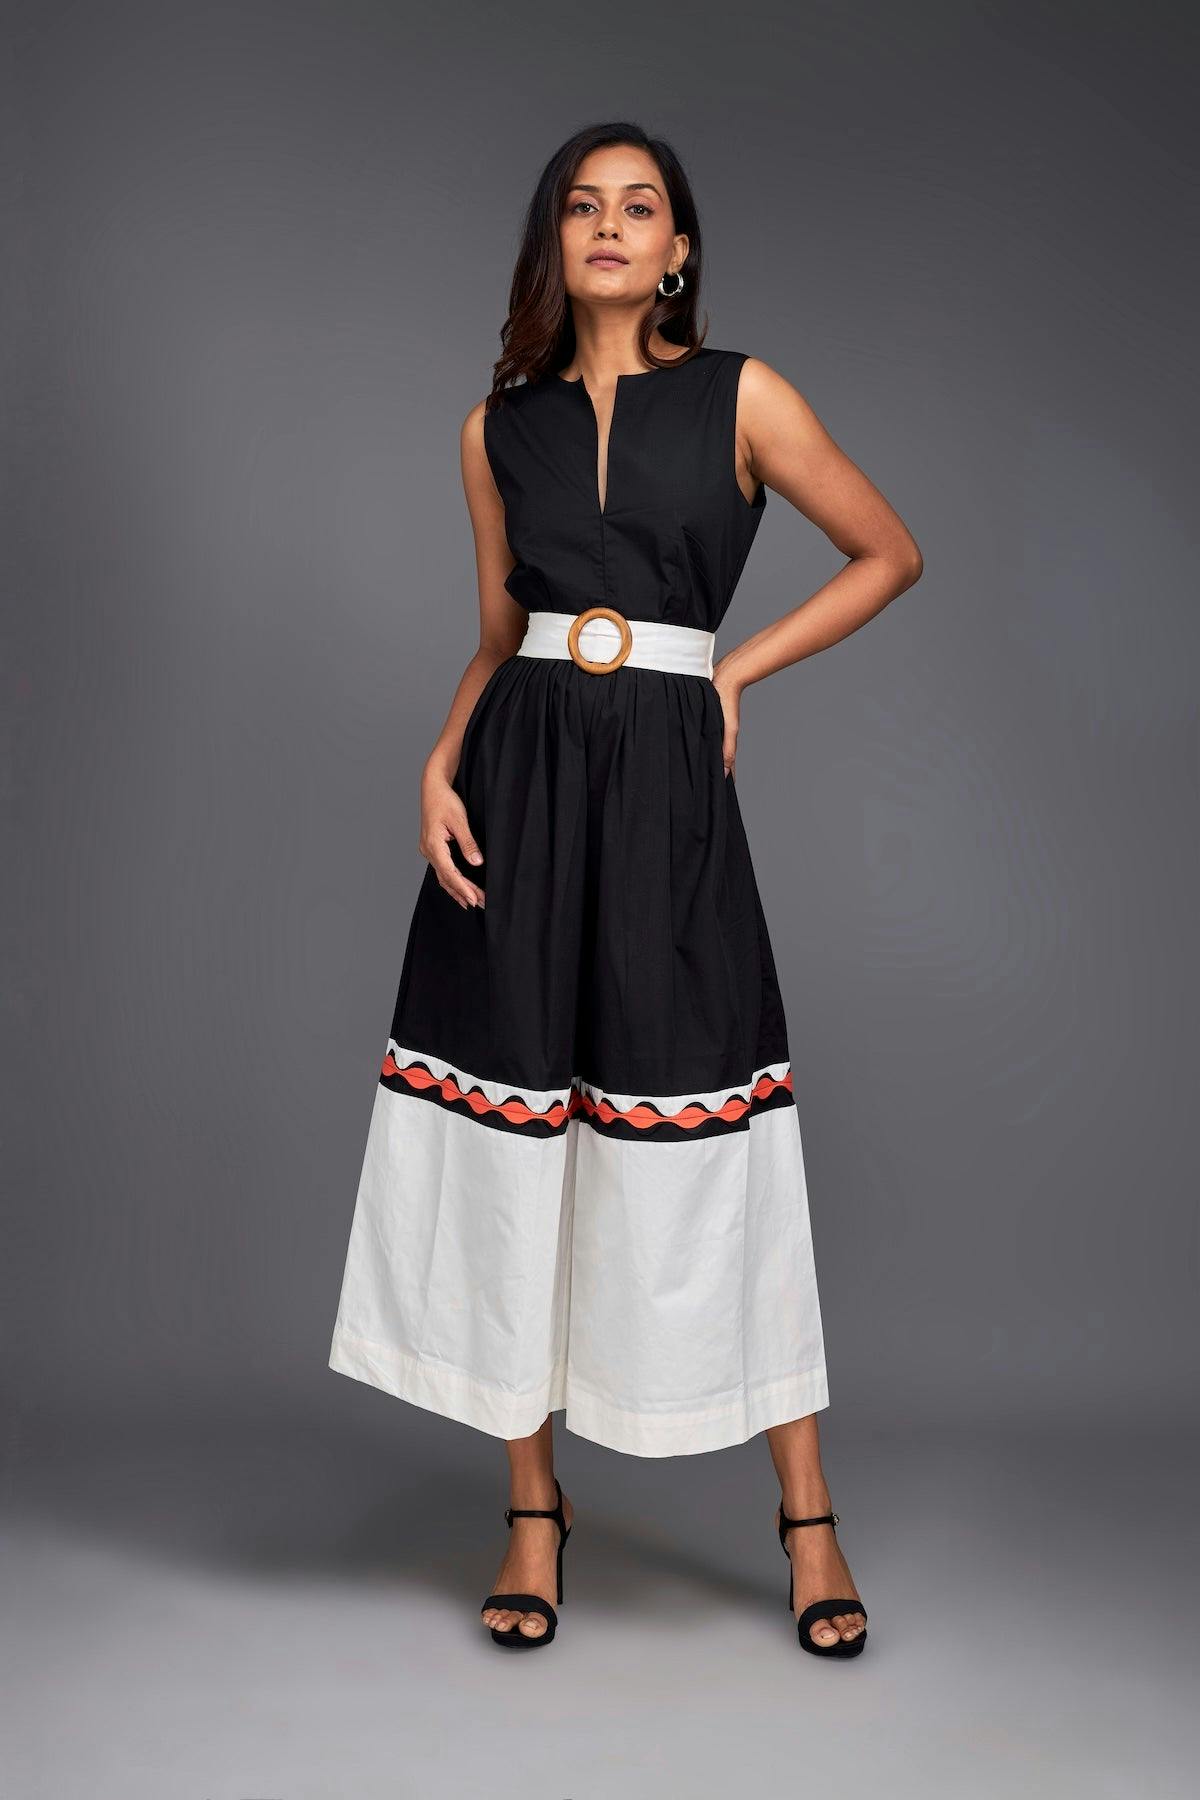 Colour Block Culotte Style Jumpsuit, a product by Deepika Arora